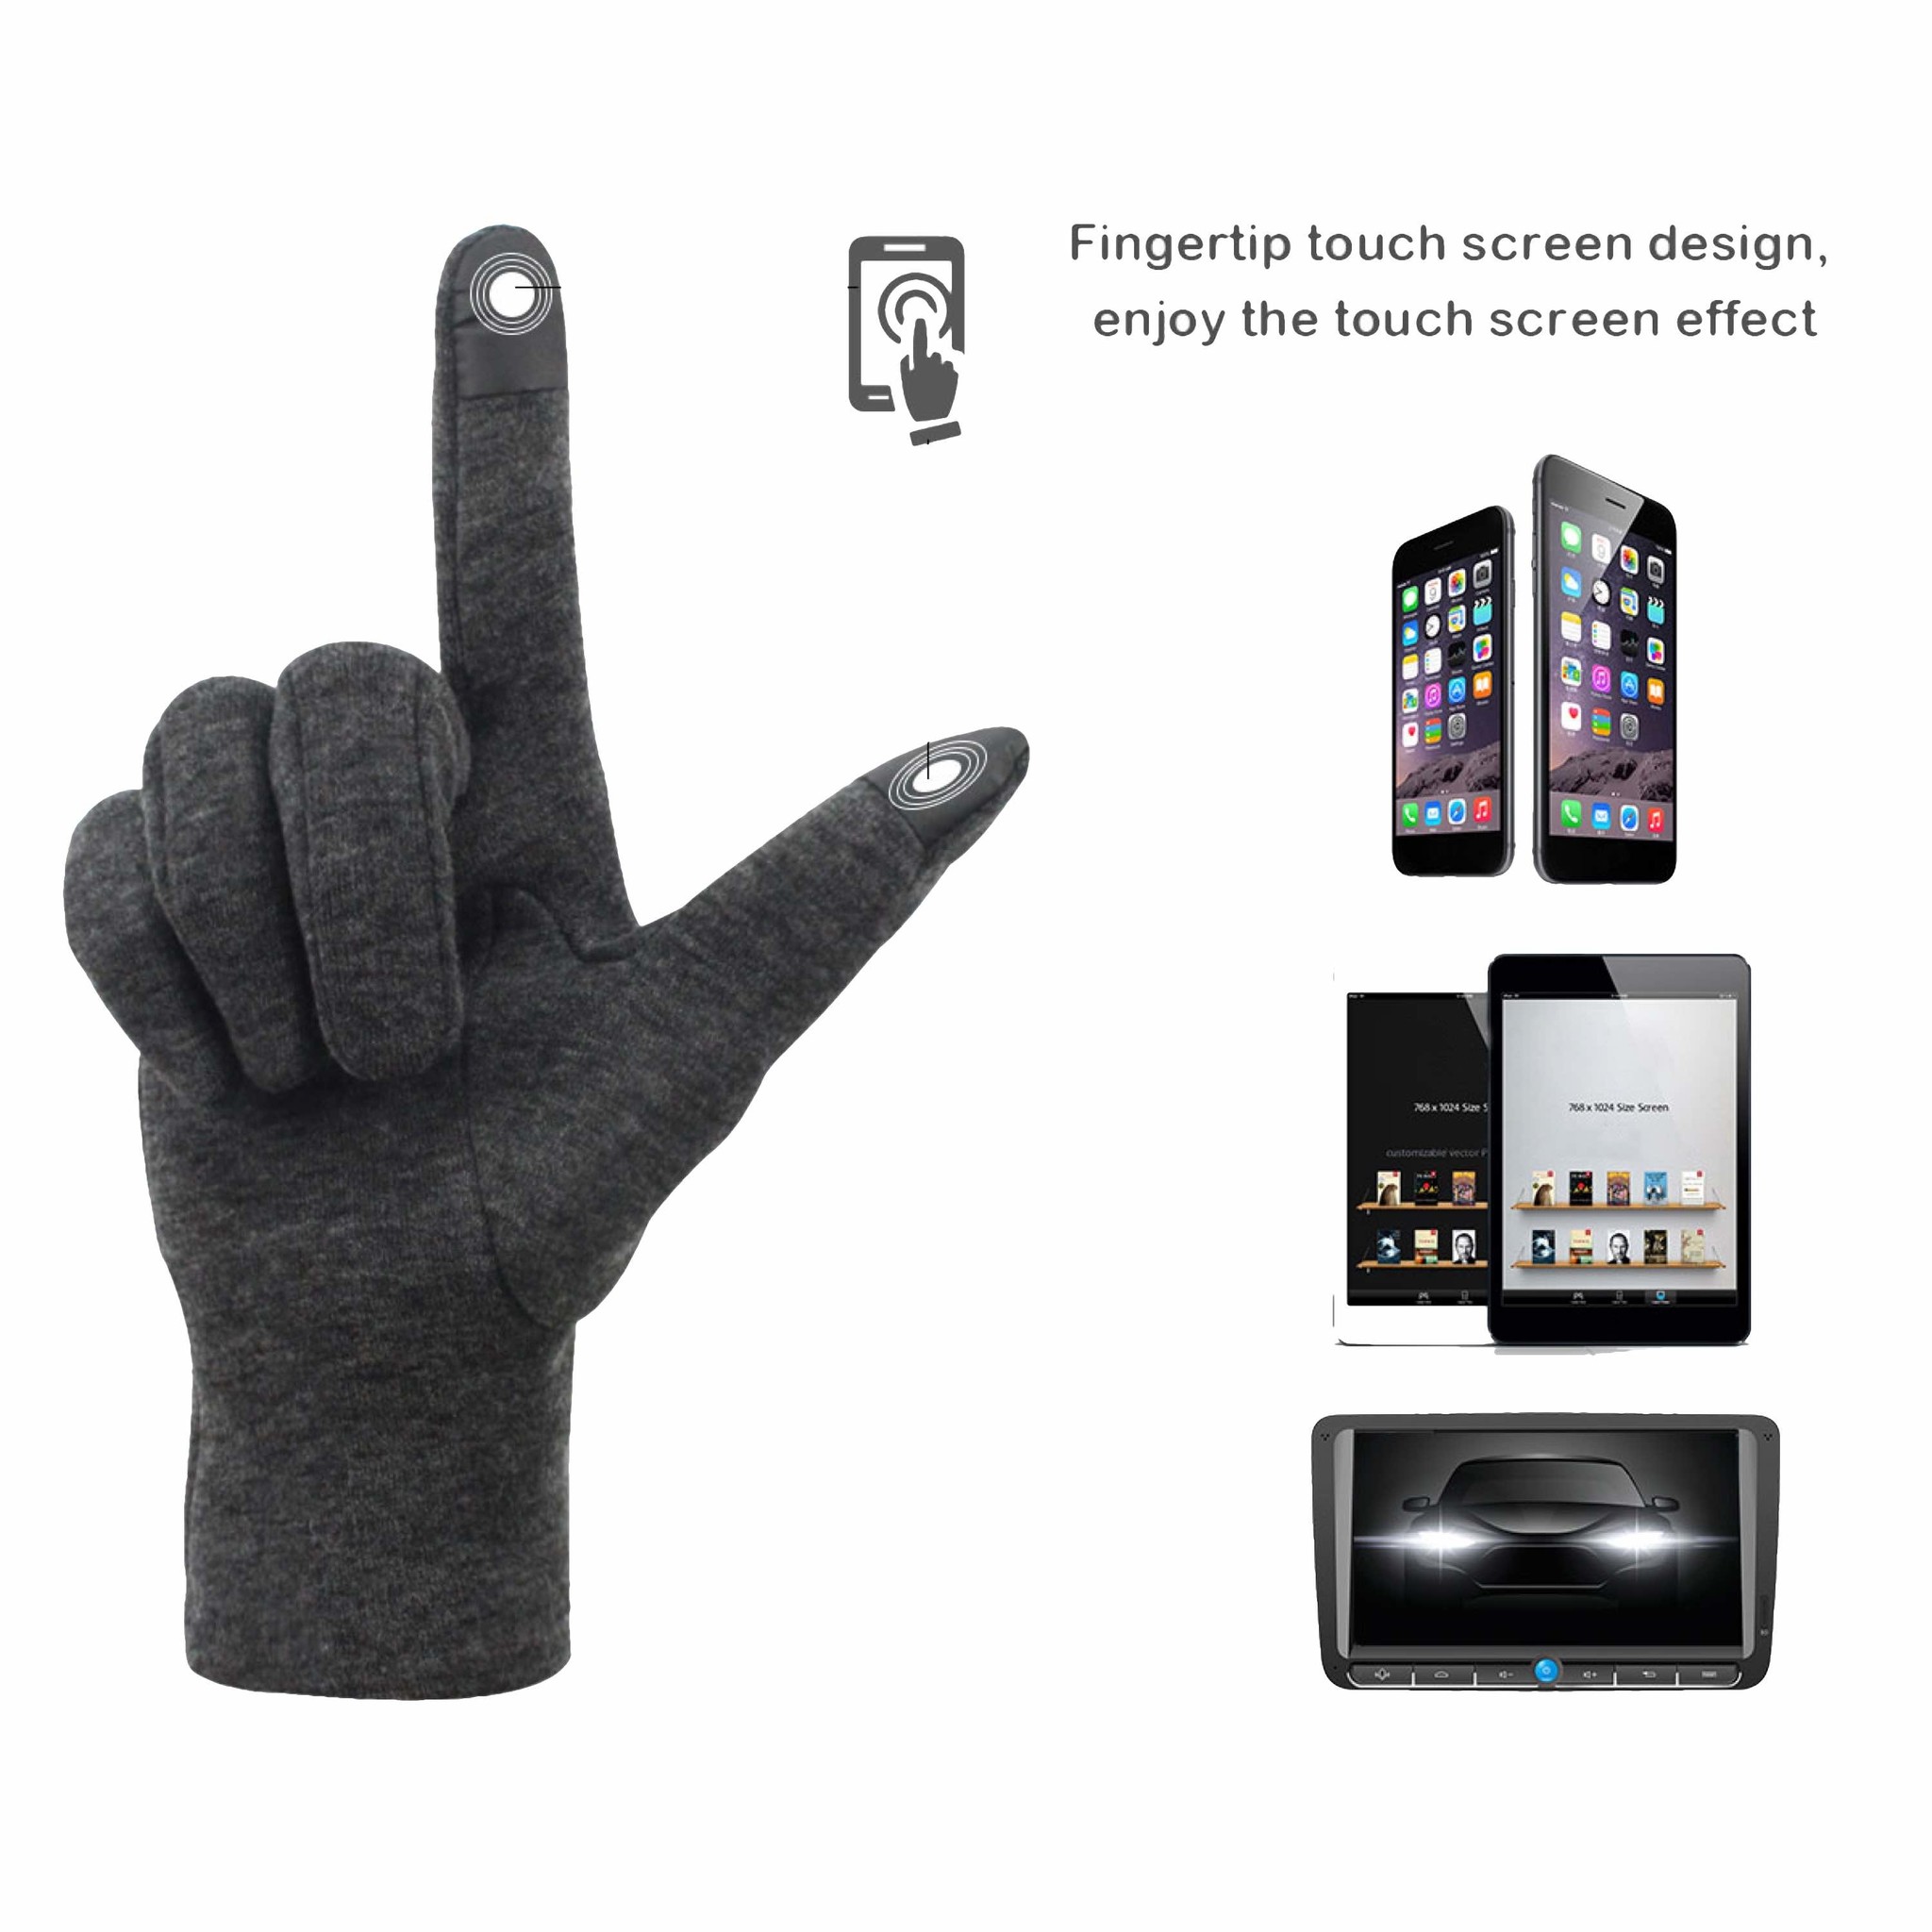 Damenhandschuhe für den Winter - Geeignet für Touchscreens - Warmes Fleece Futter - Einheitsgröße - Grau-5